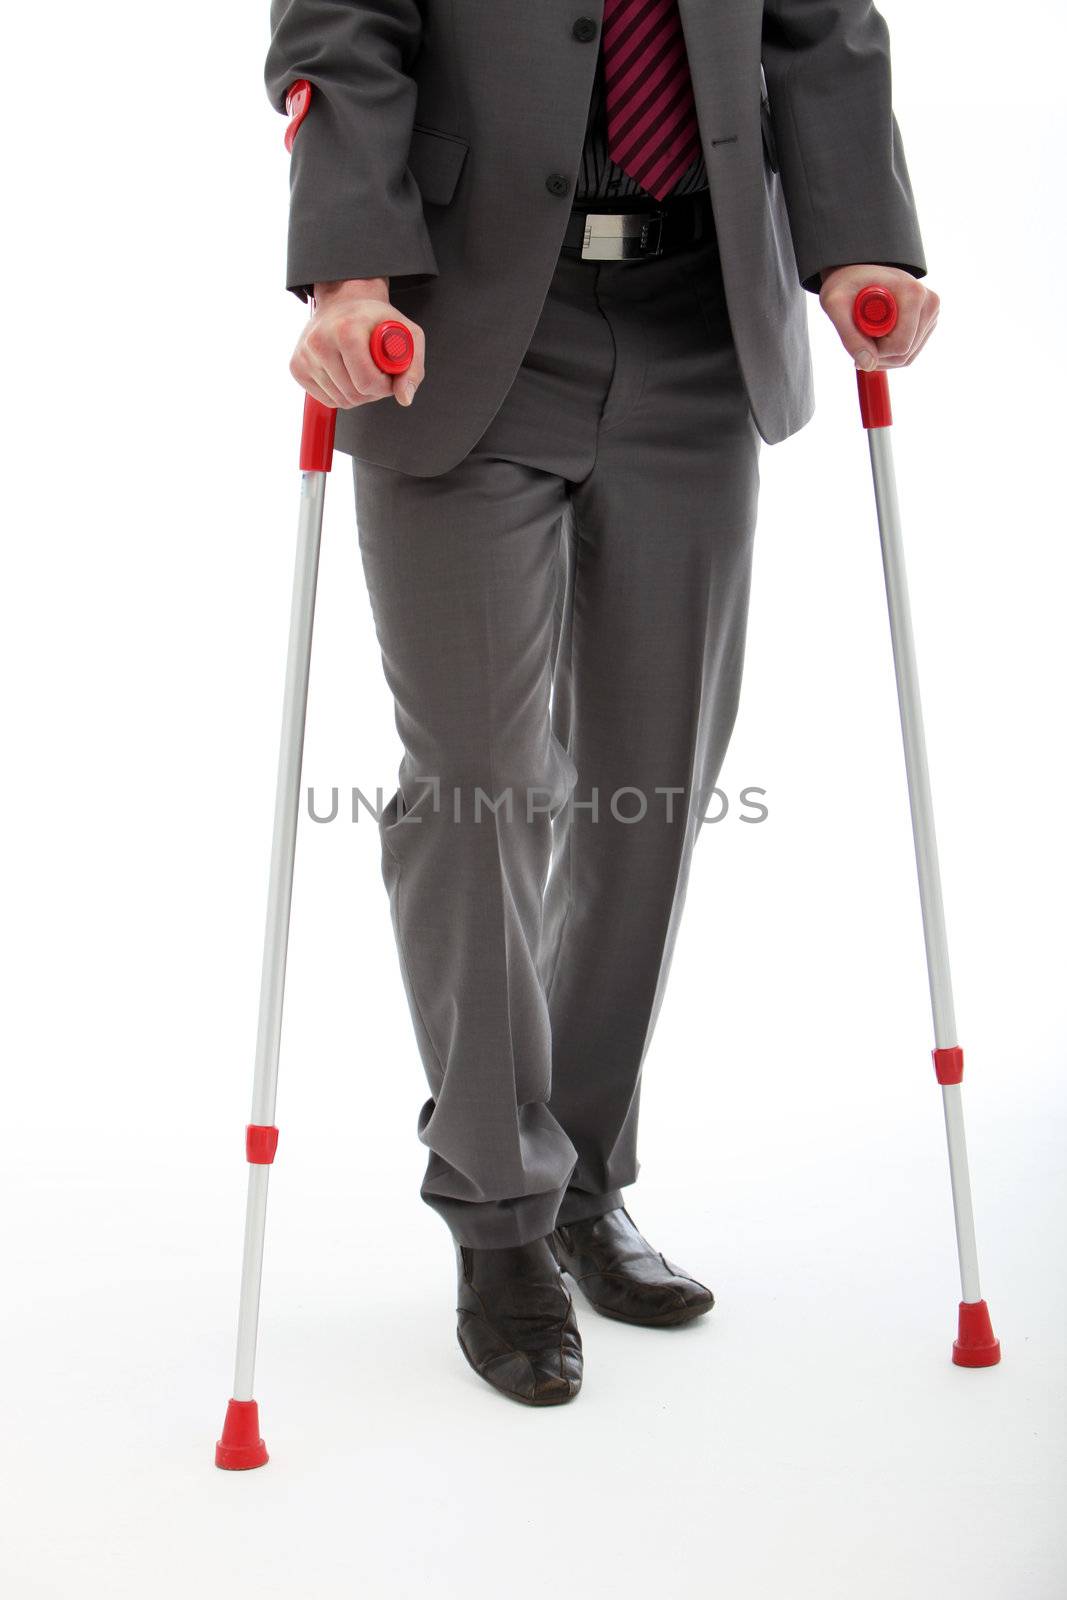 Businessman Walking On Crutches by Farina6000